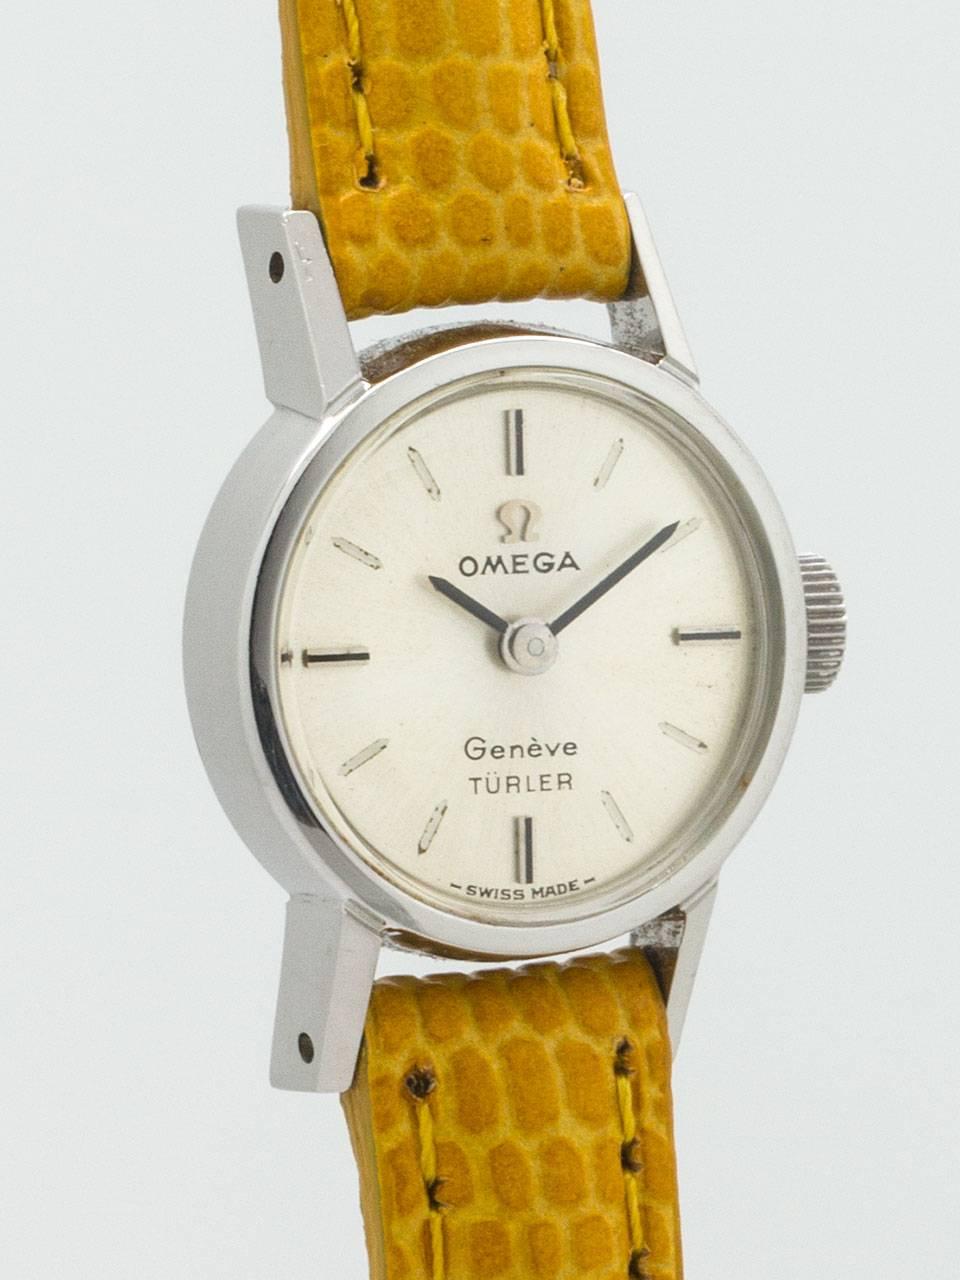 Modern Omega Ladies Geneve Stainless Steel “Turler” Wristwatch